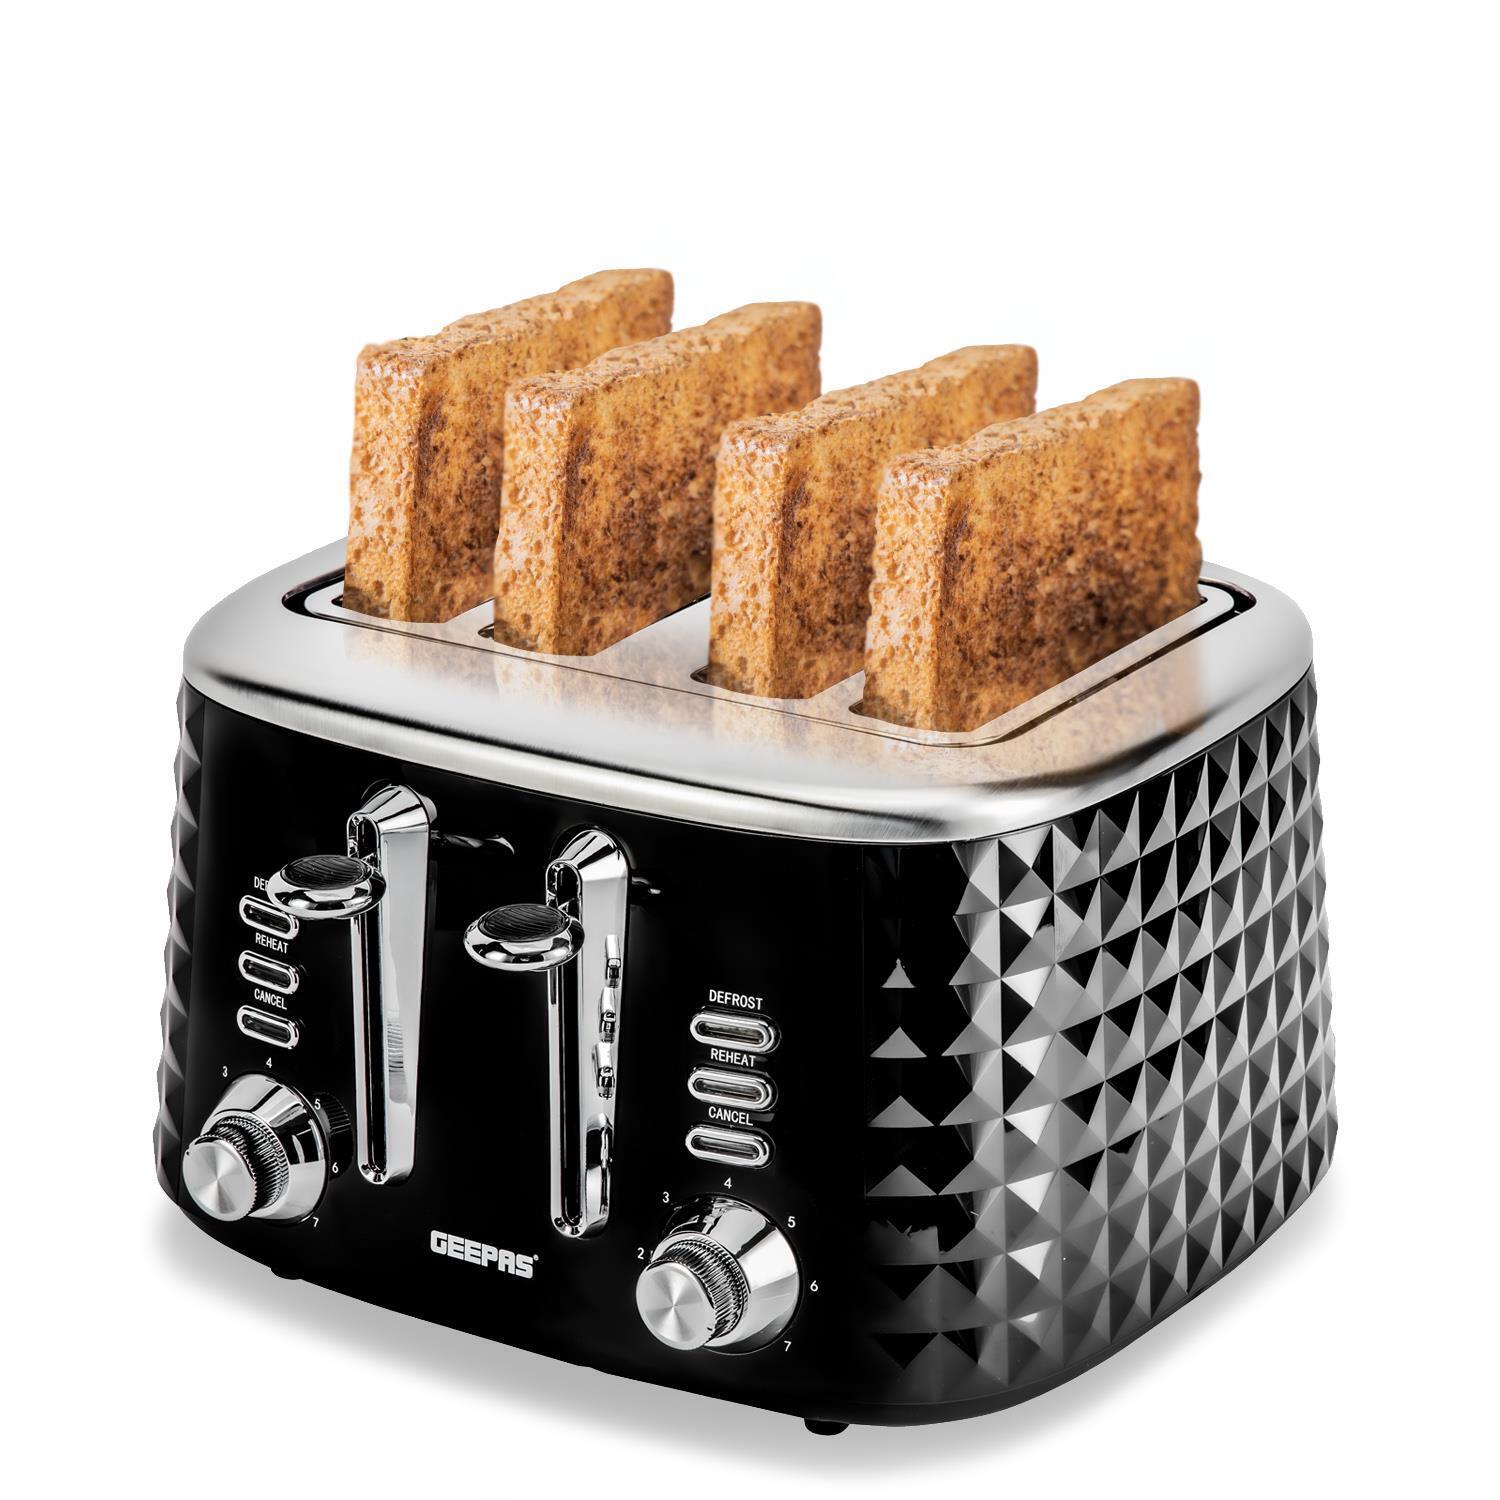 White and Black Versatile 4-Slice Toaster 1750W